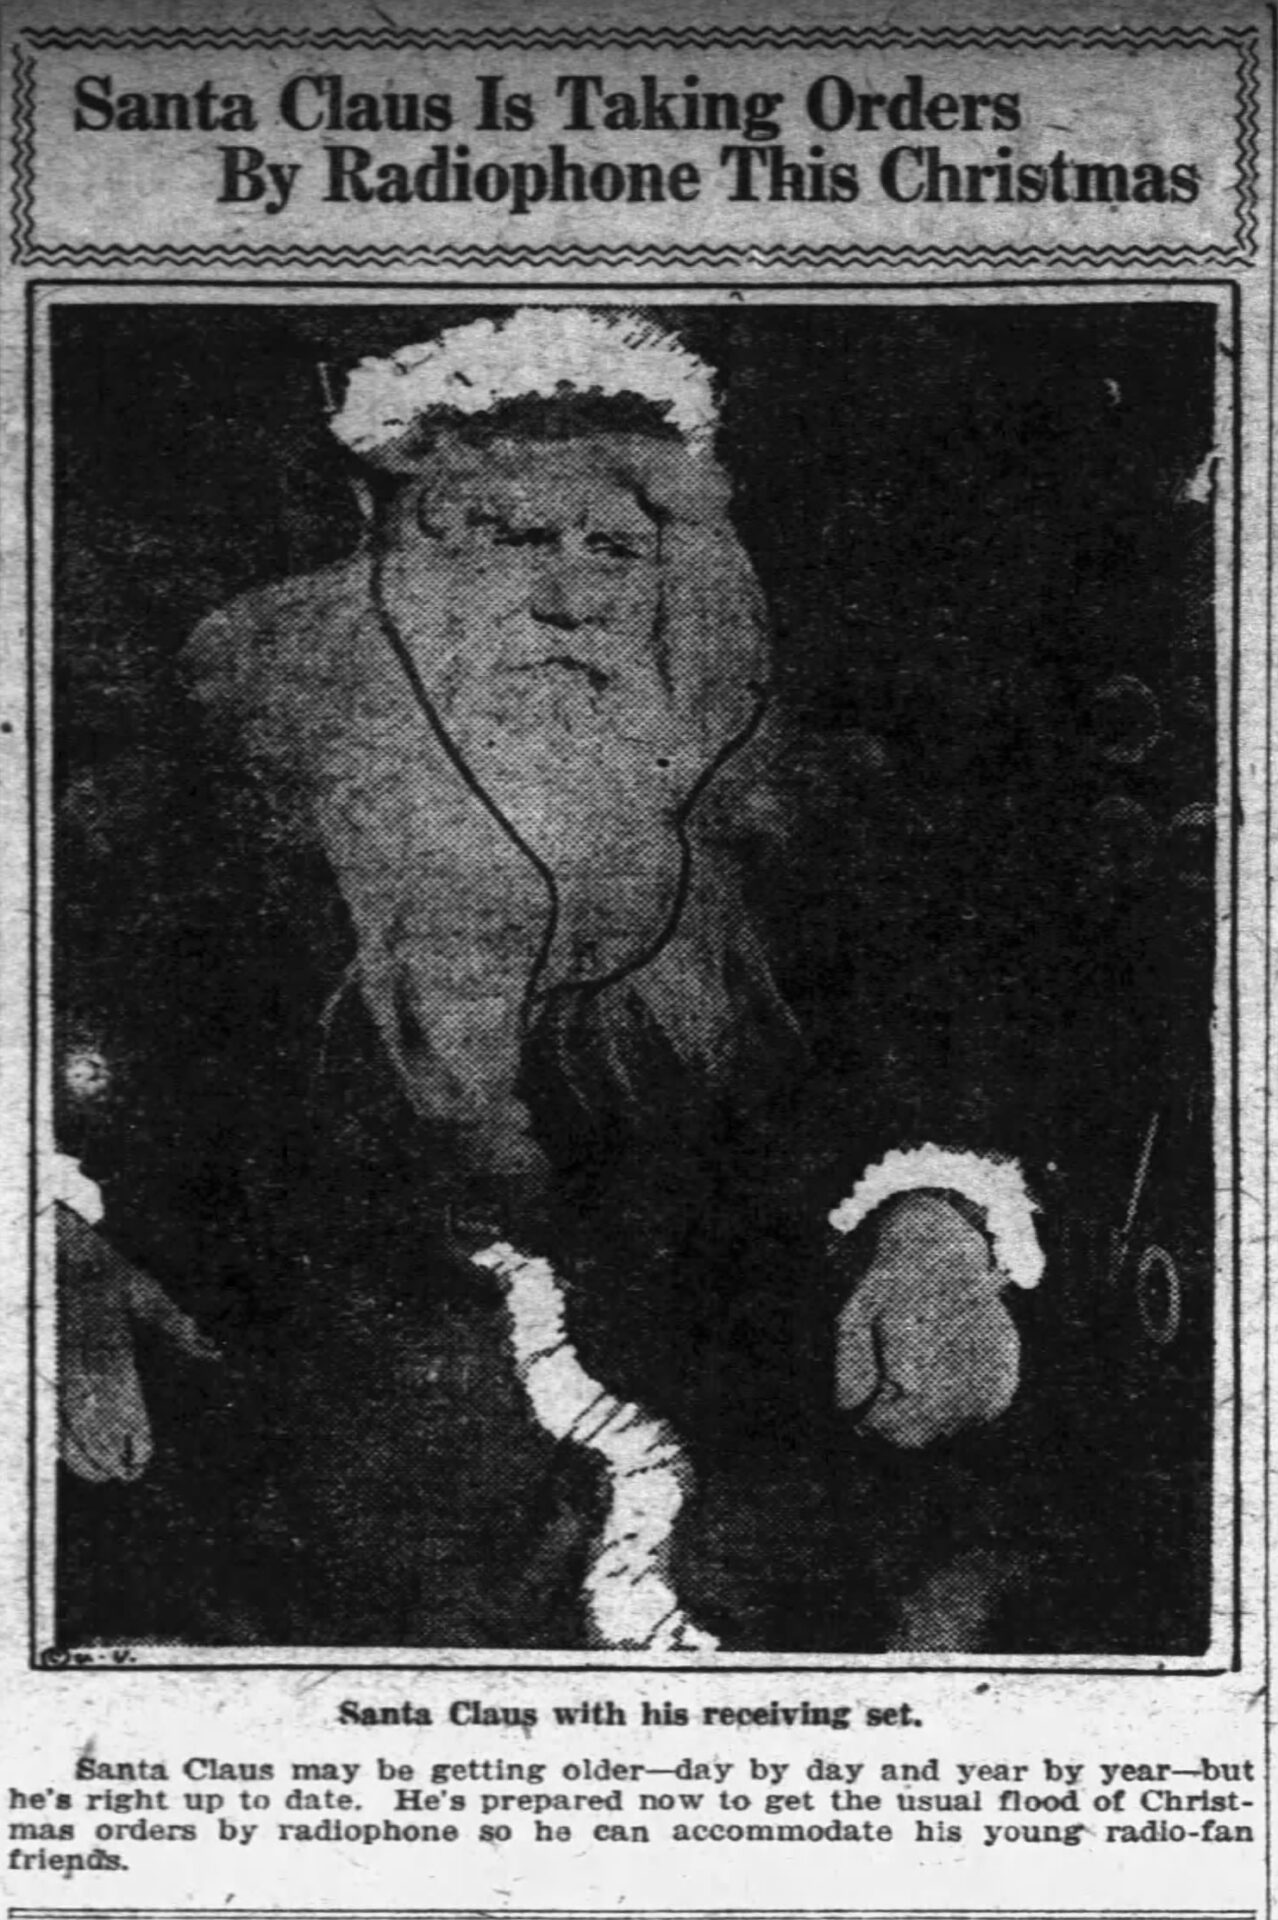 Knoxville Journal & Tribune, December 23, 1922.